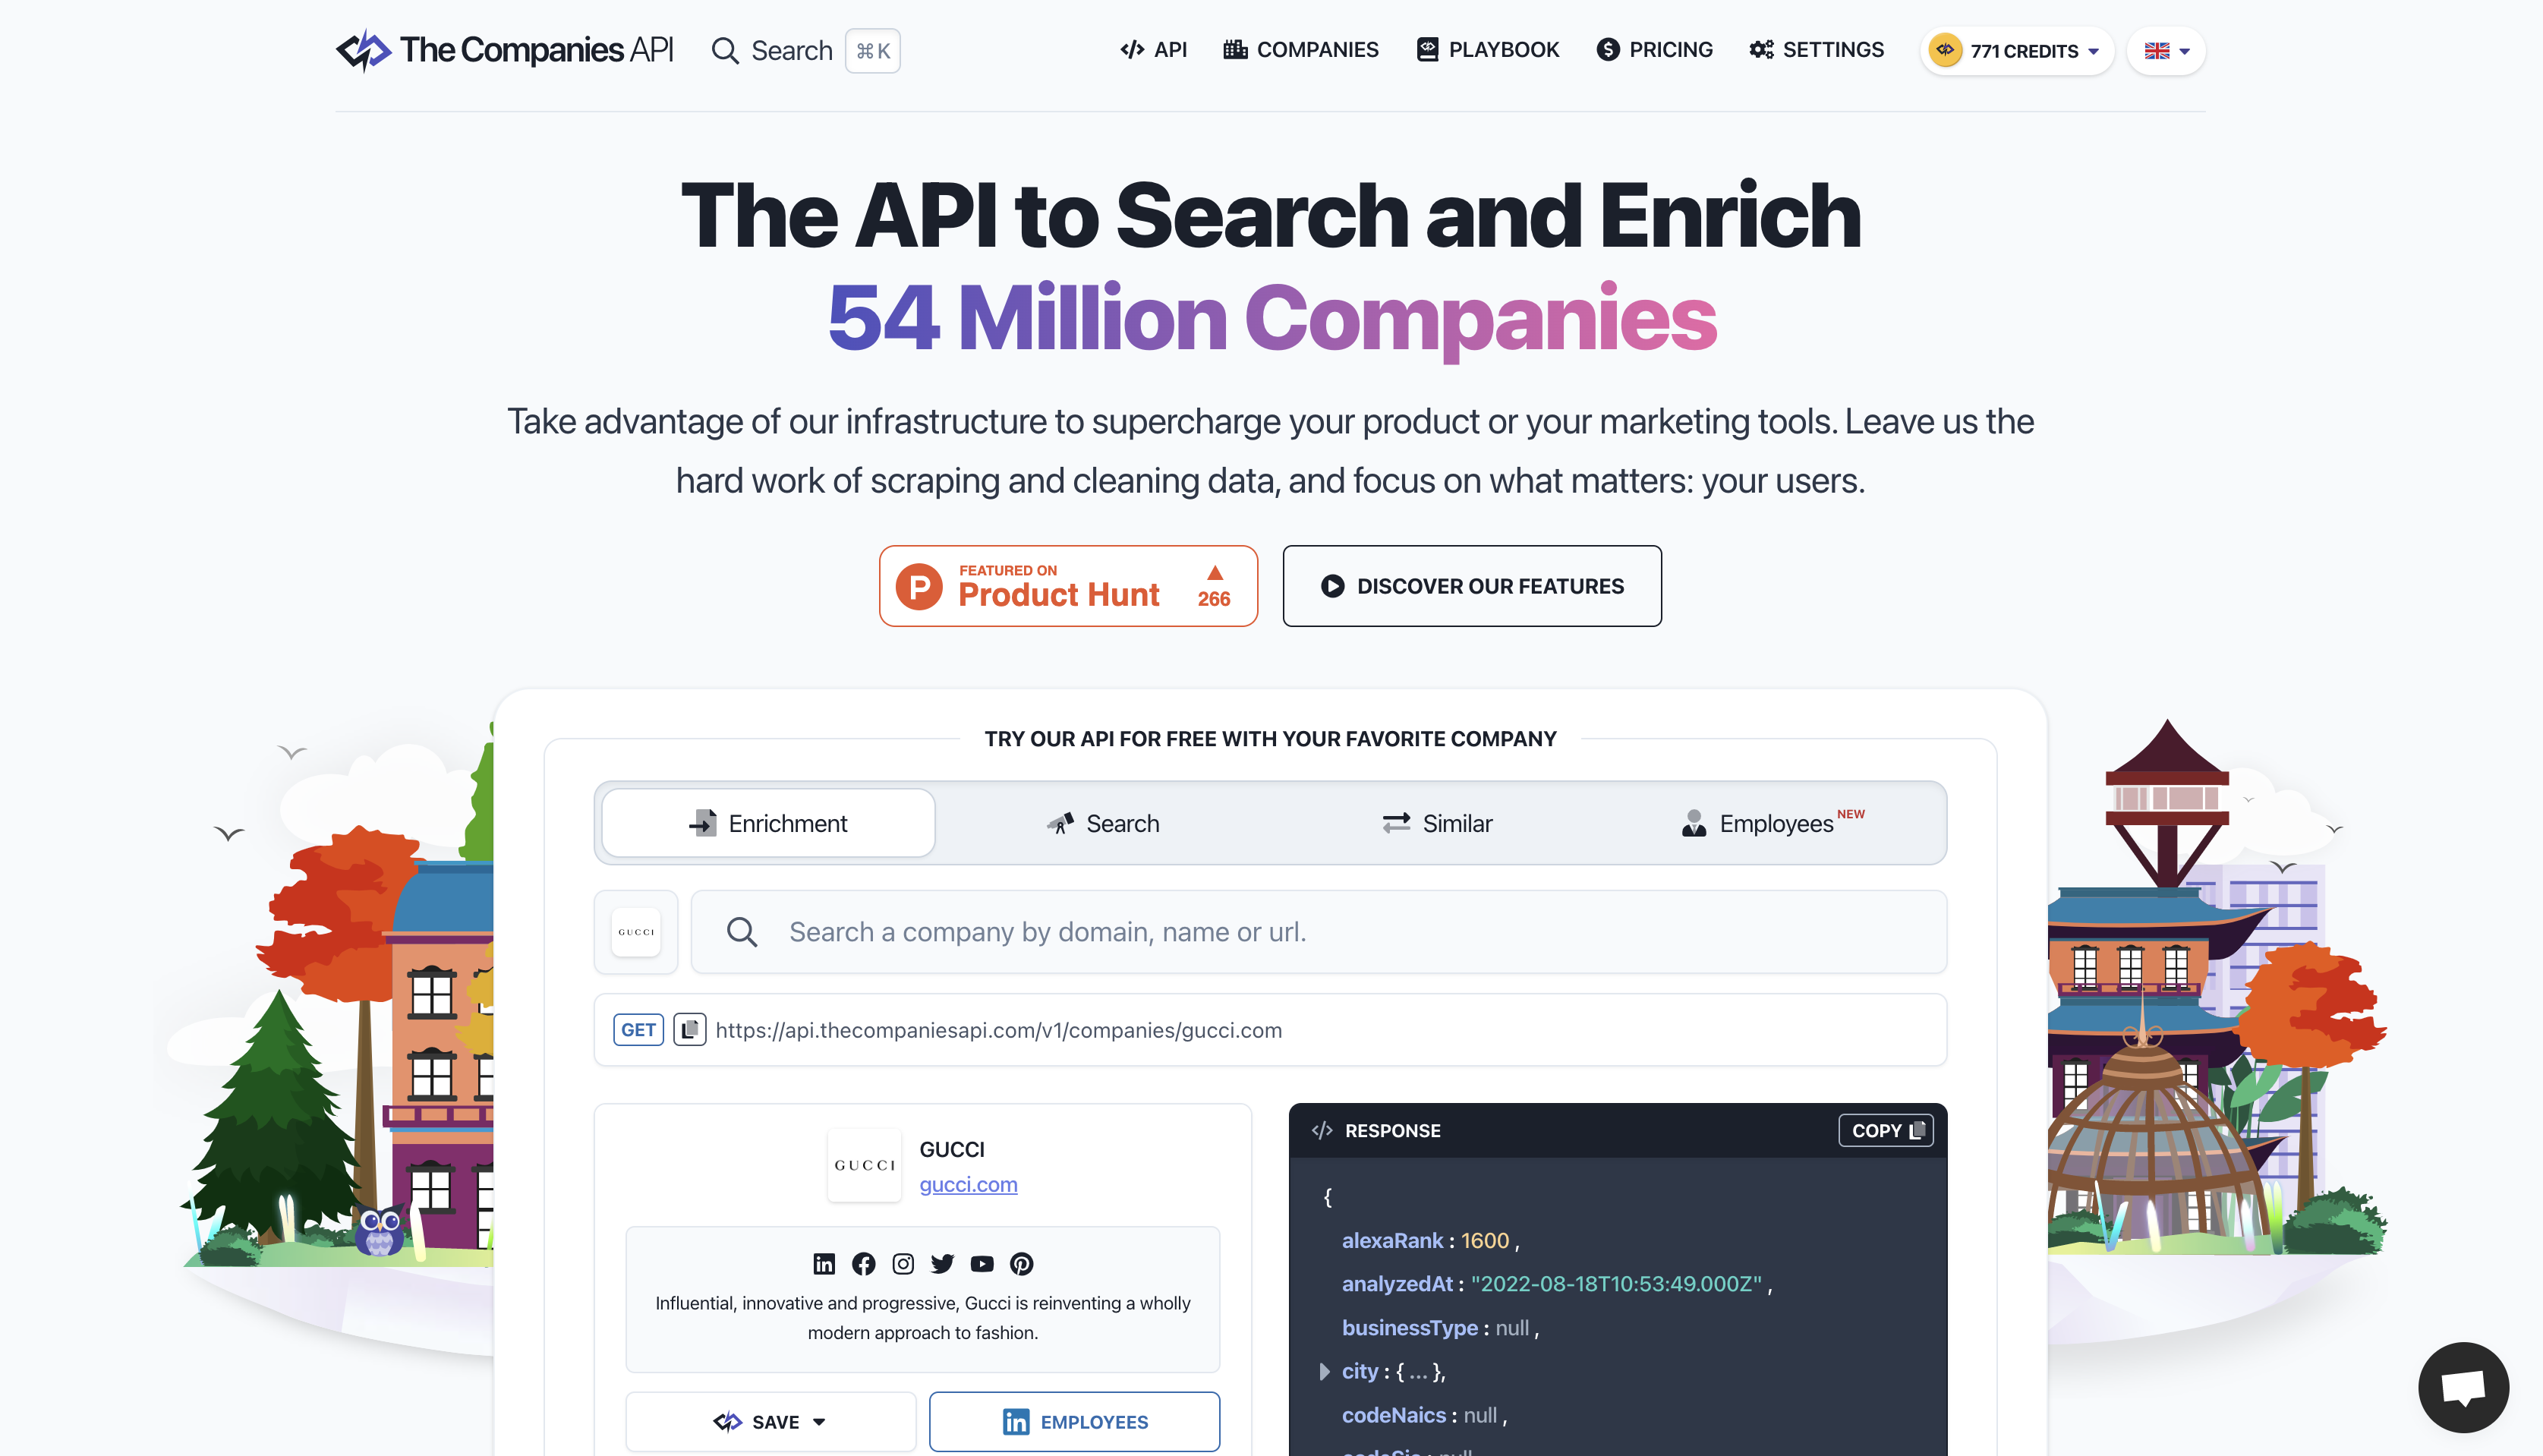 The Companies API Landing page